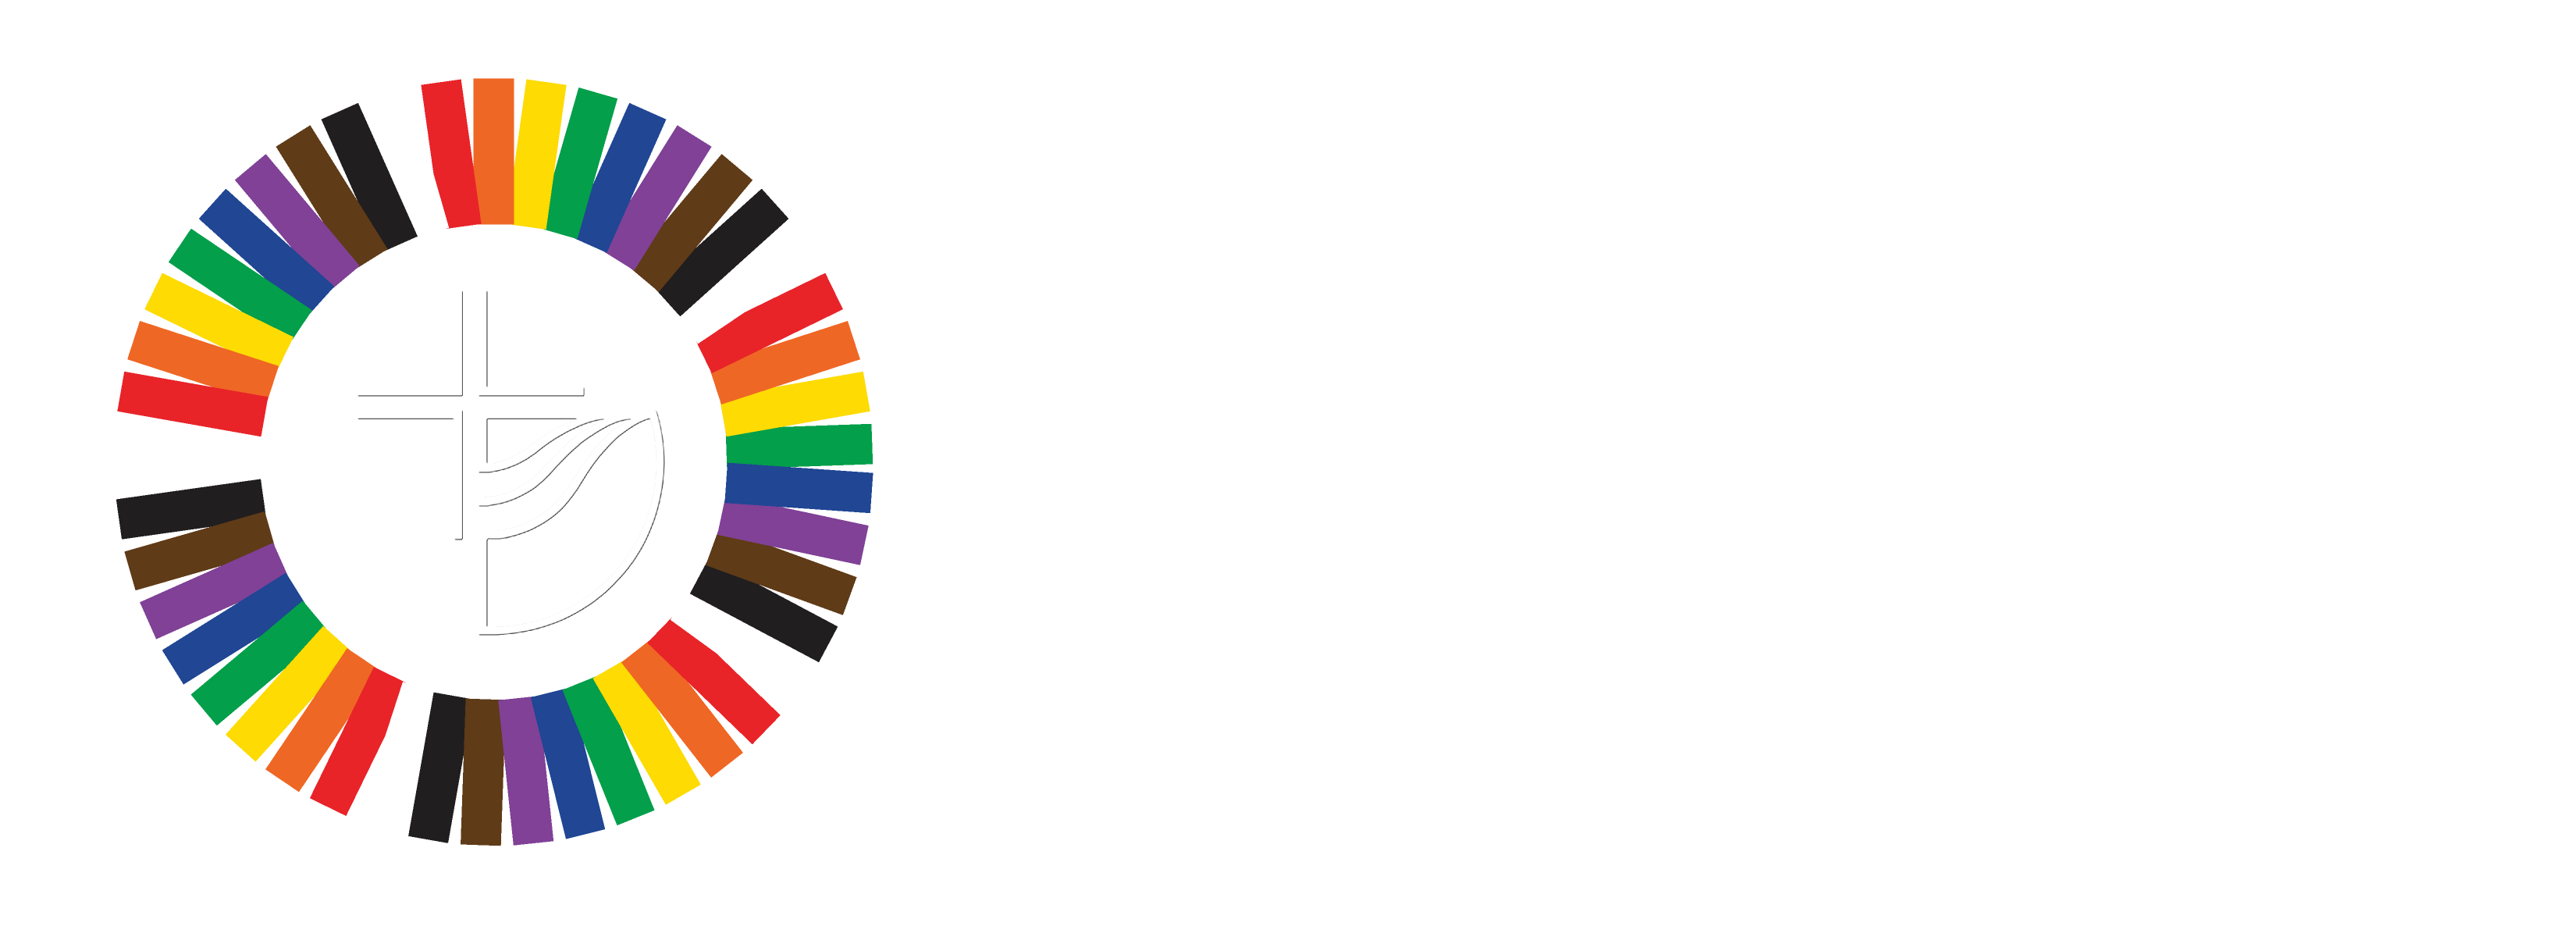 West Charleston Church of the Brethren Logo